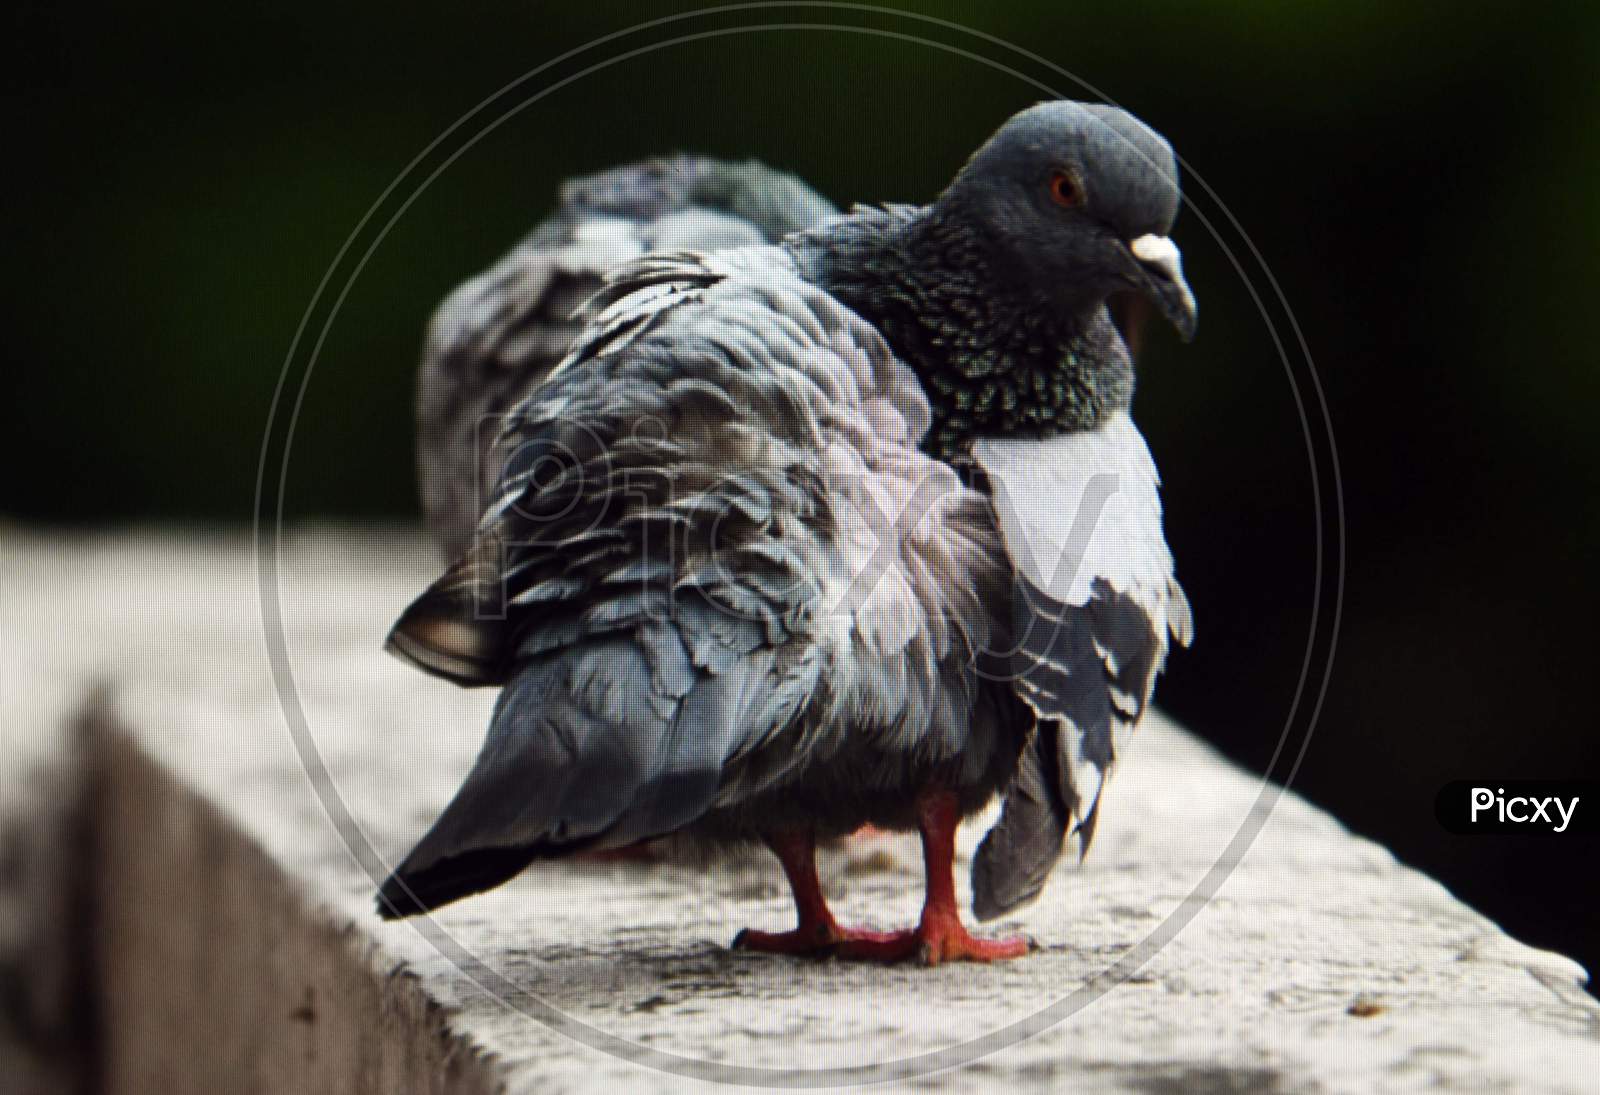 Selective focus on Birds Pigeon flying captured